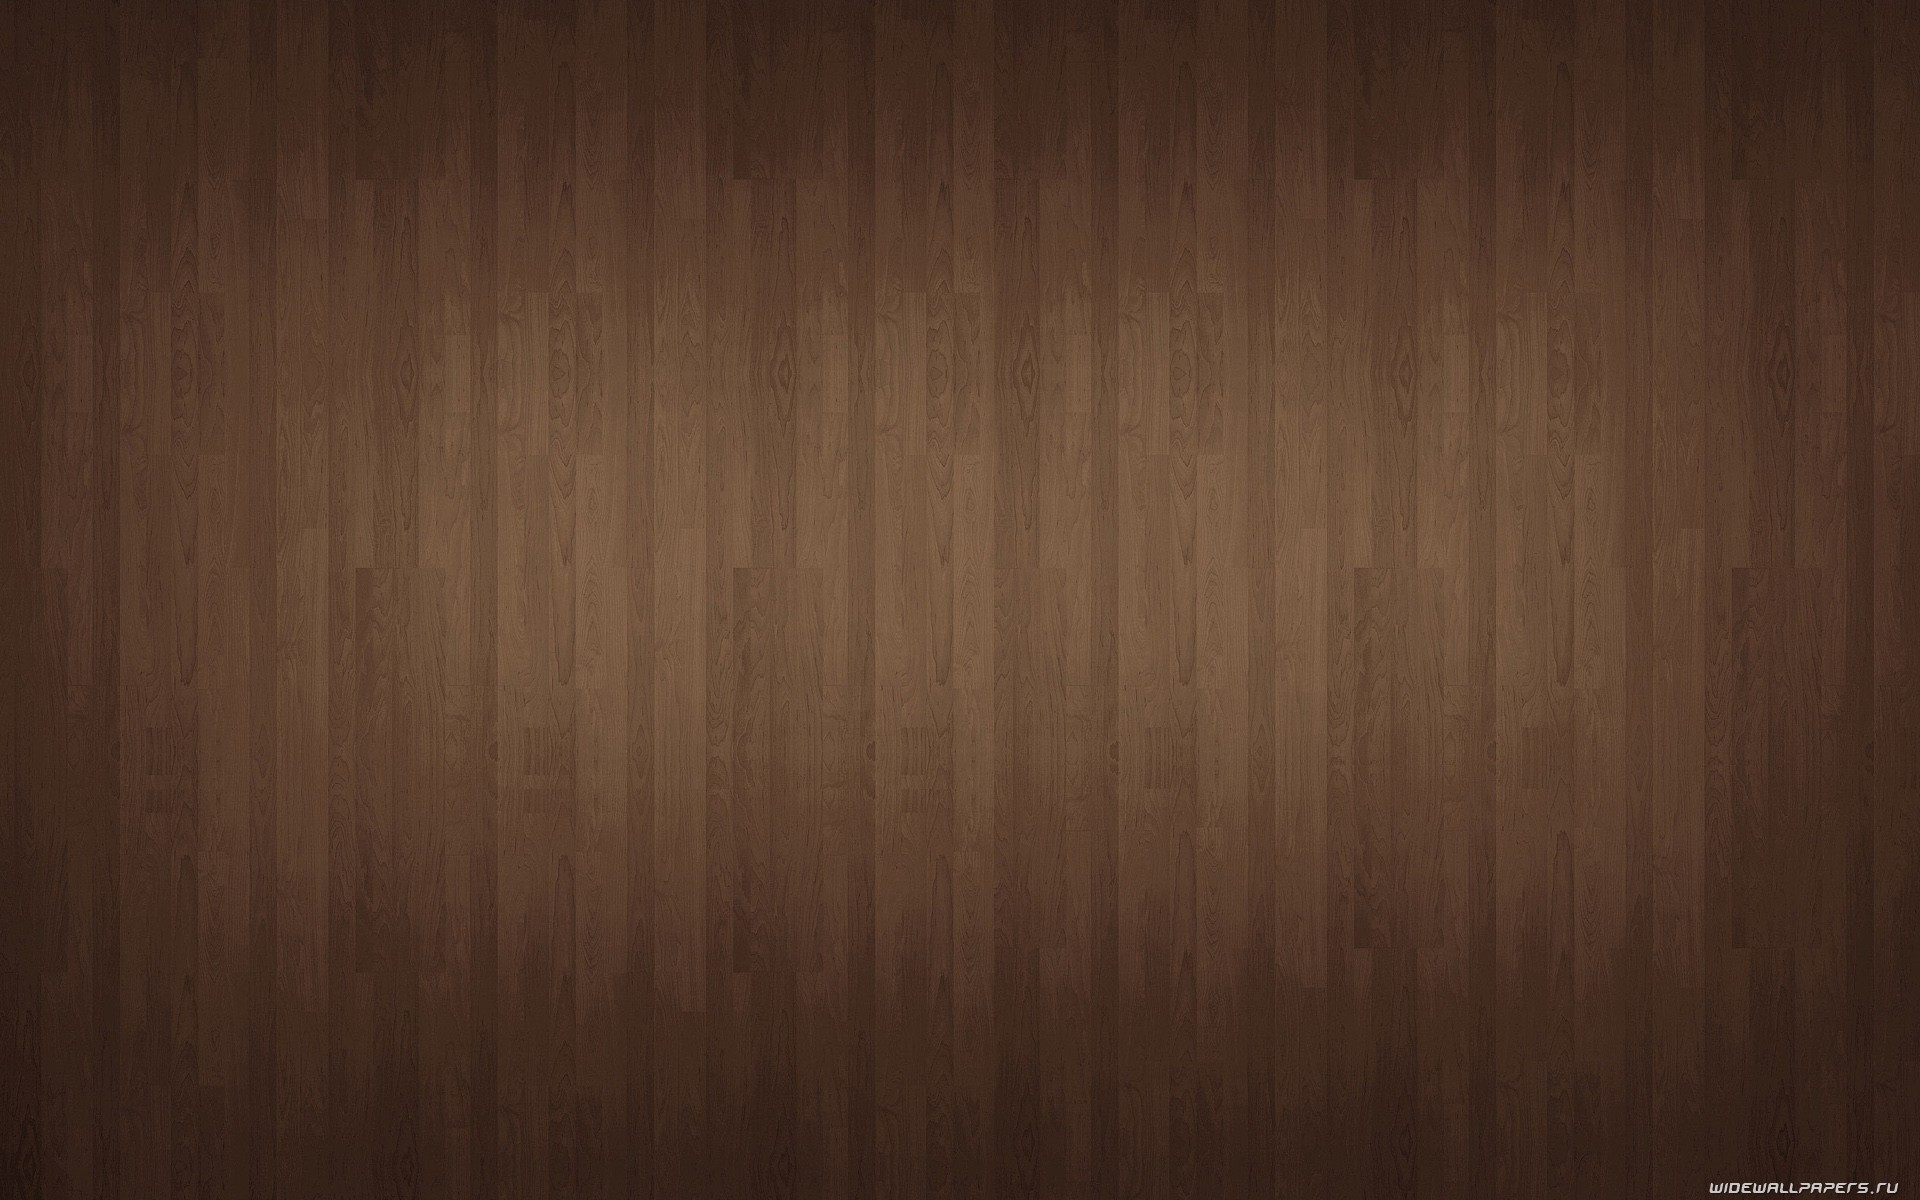 General 1920x1200 pattern wood planks texture